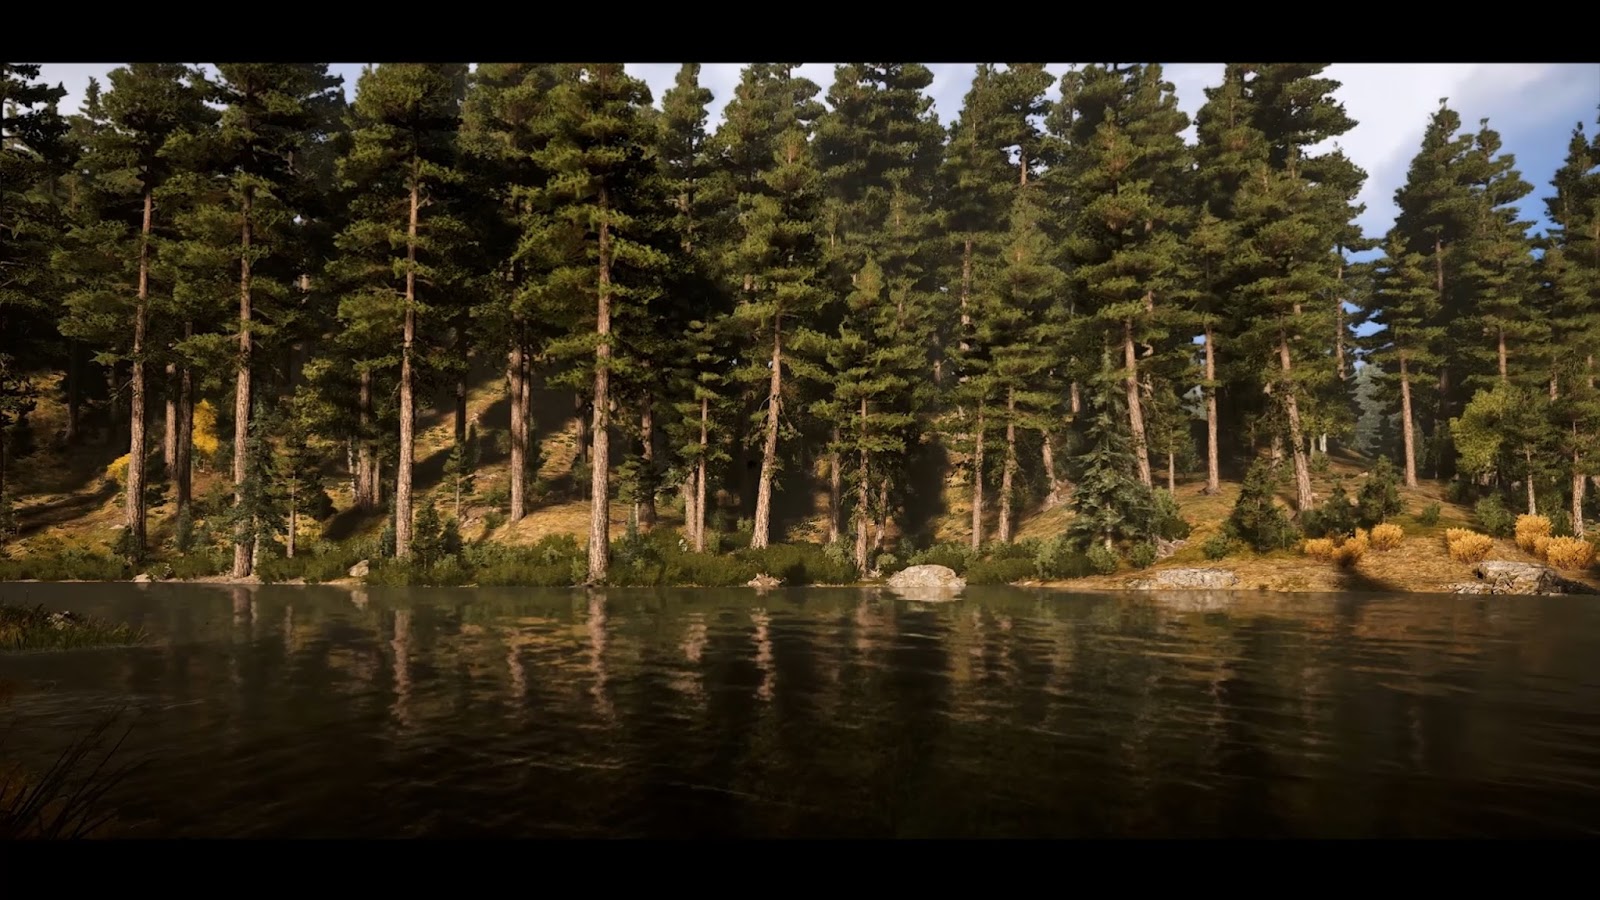 Far Cry 2 KTMXHancer Far Cry 2 Ultra Graphics Mod 2018 With